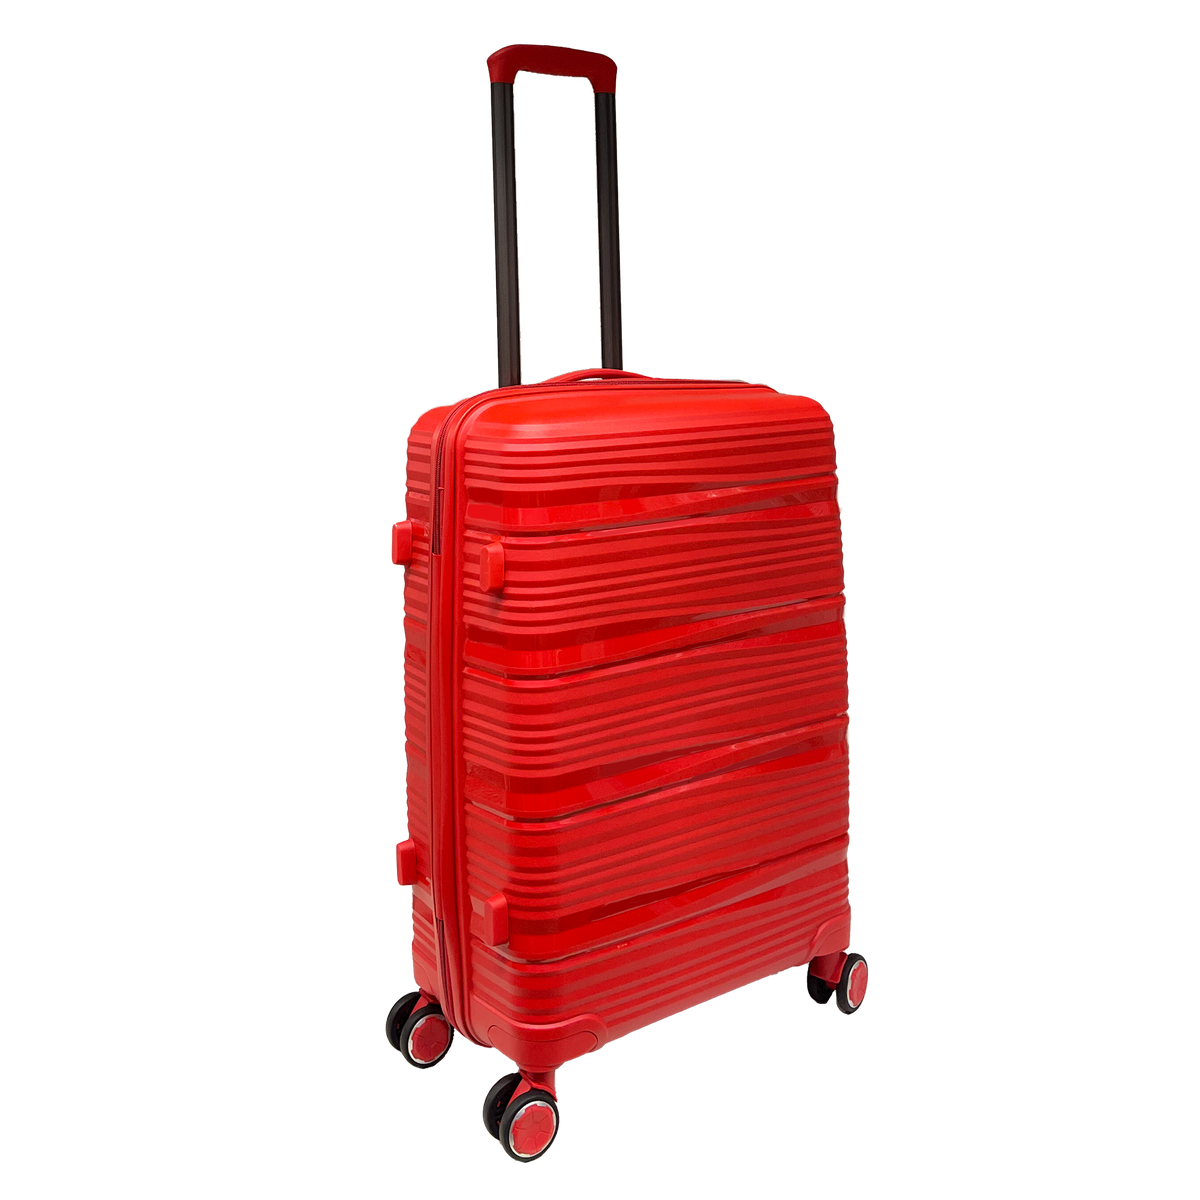 Average polypropylene suitcase resistance to integrated tsa padlock